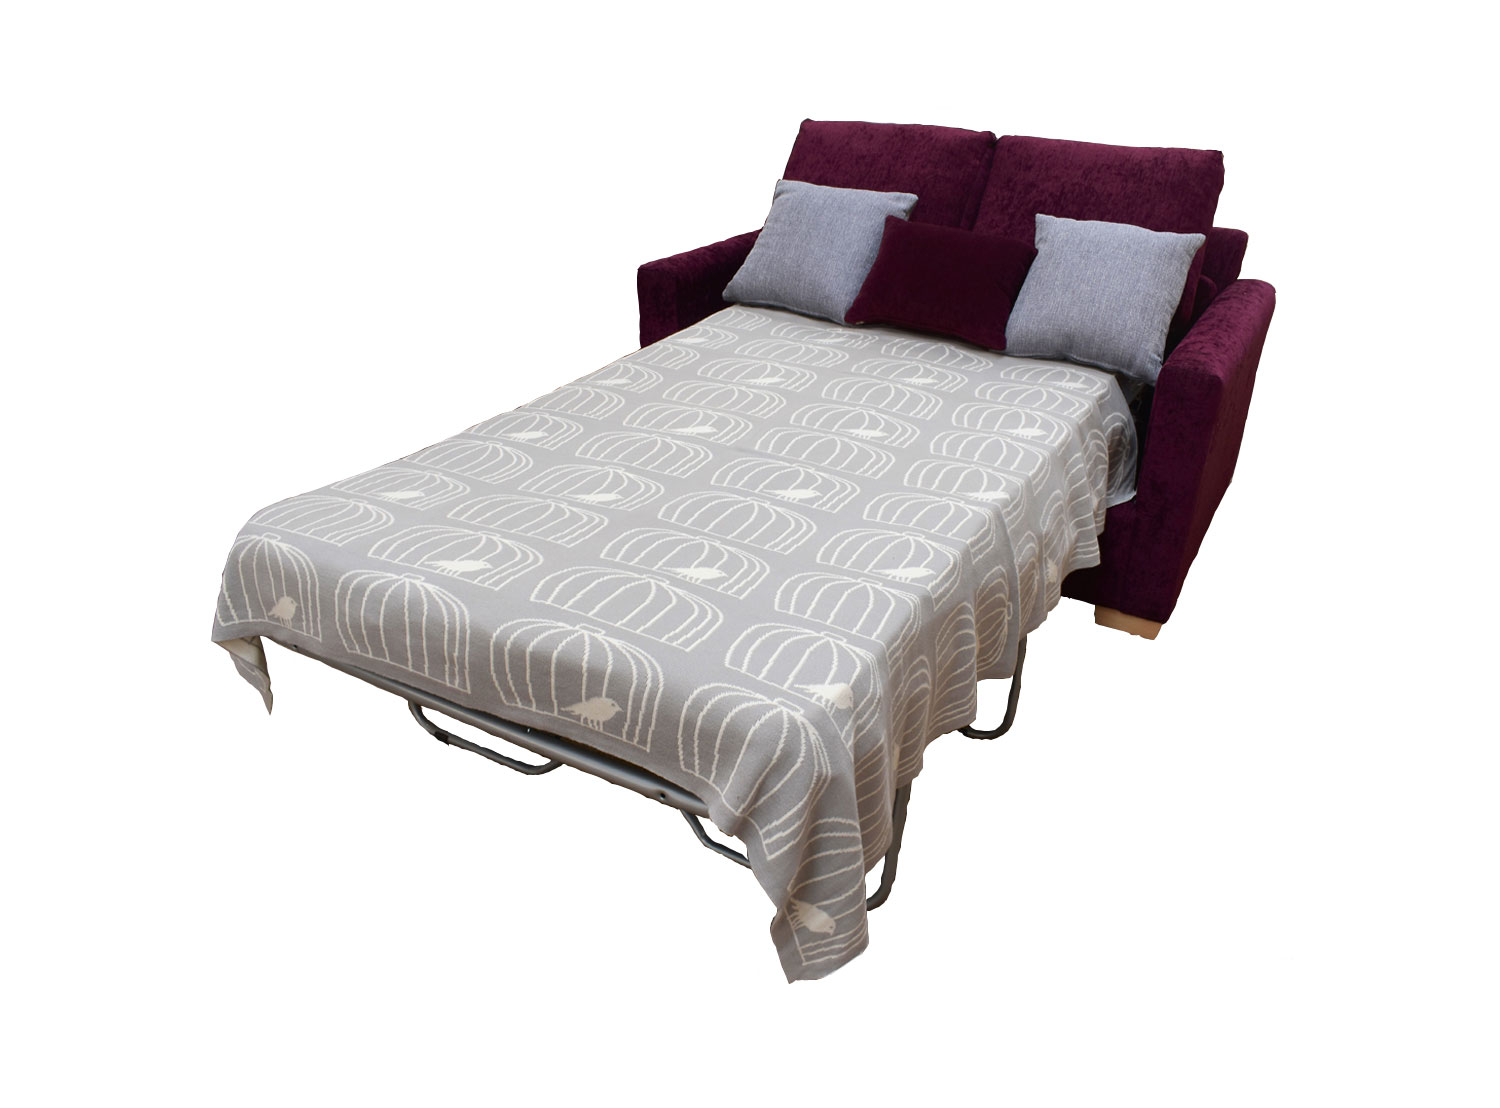 venice sofa bed ebay